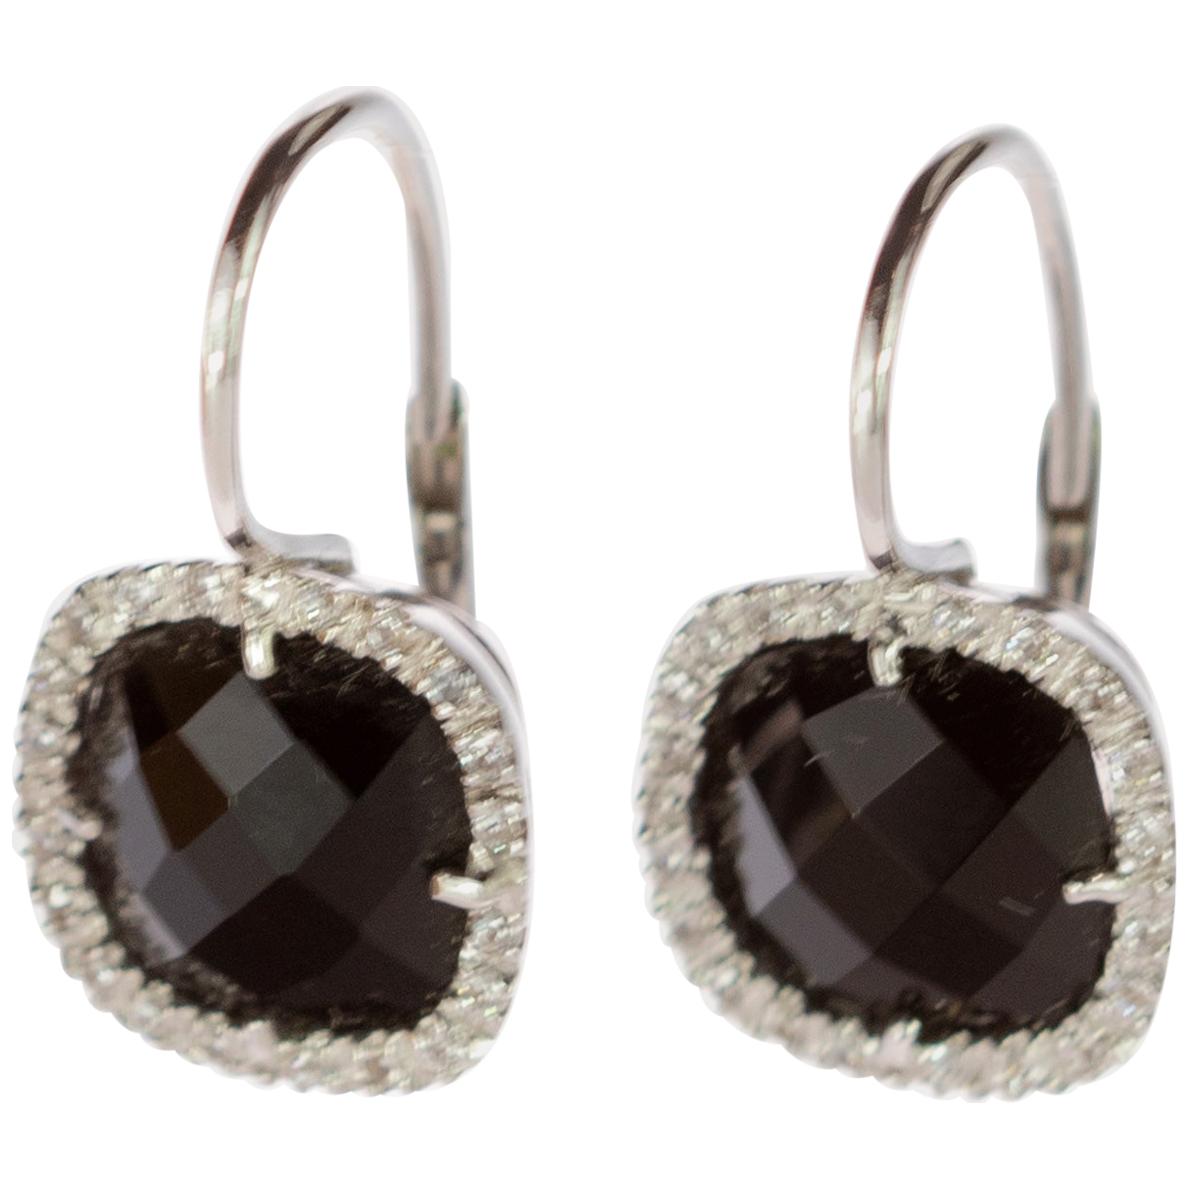 Intini Jewels Diamond Black Onyx 18 Karat Gold Vintage Square Clip-On Earrings